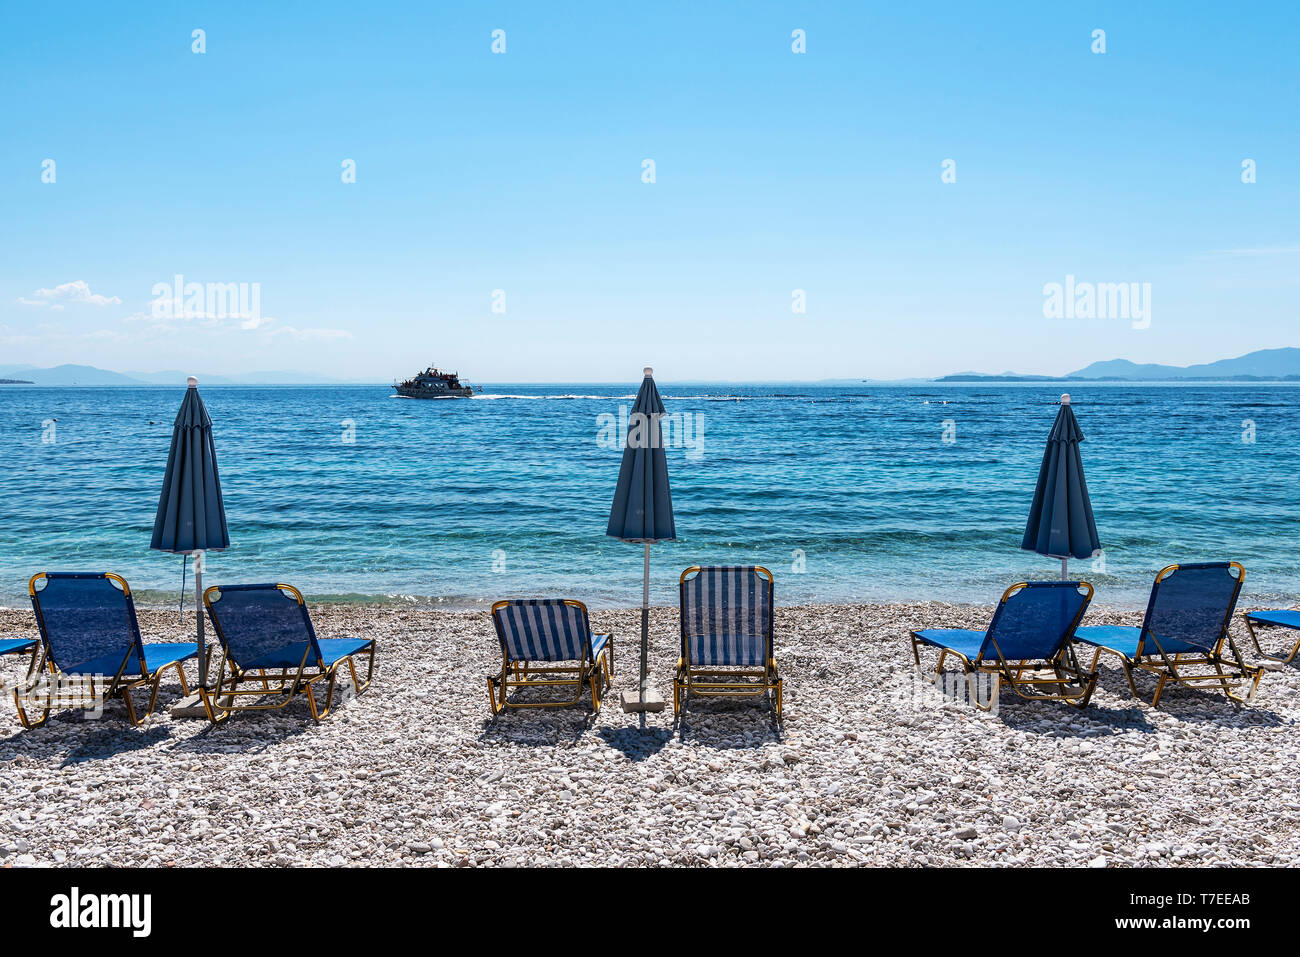 deckchairs, Kaminaki, beach, Nissaki, Corfu Island, Ionian Islands, Mediterranean Sea, Greece Stock Photo